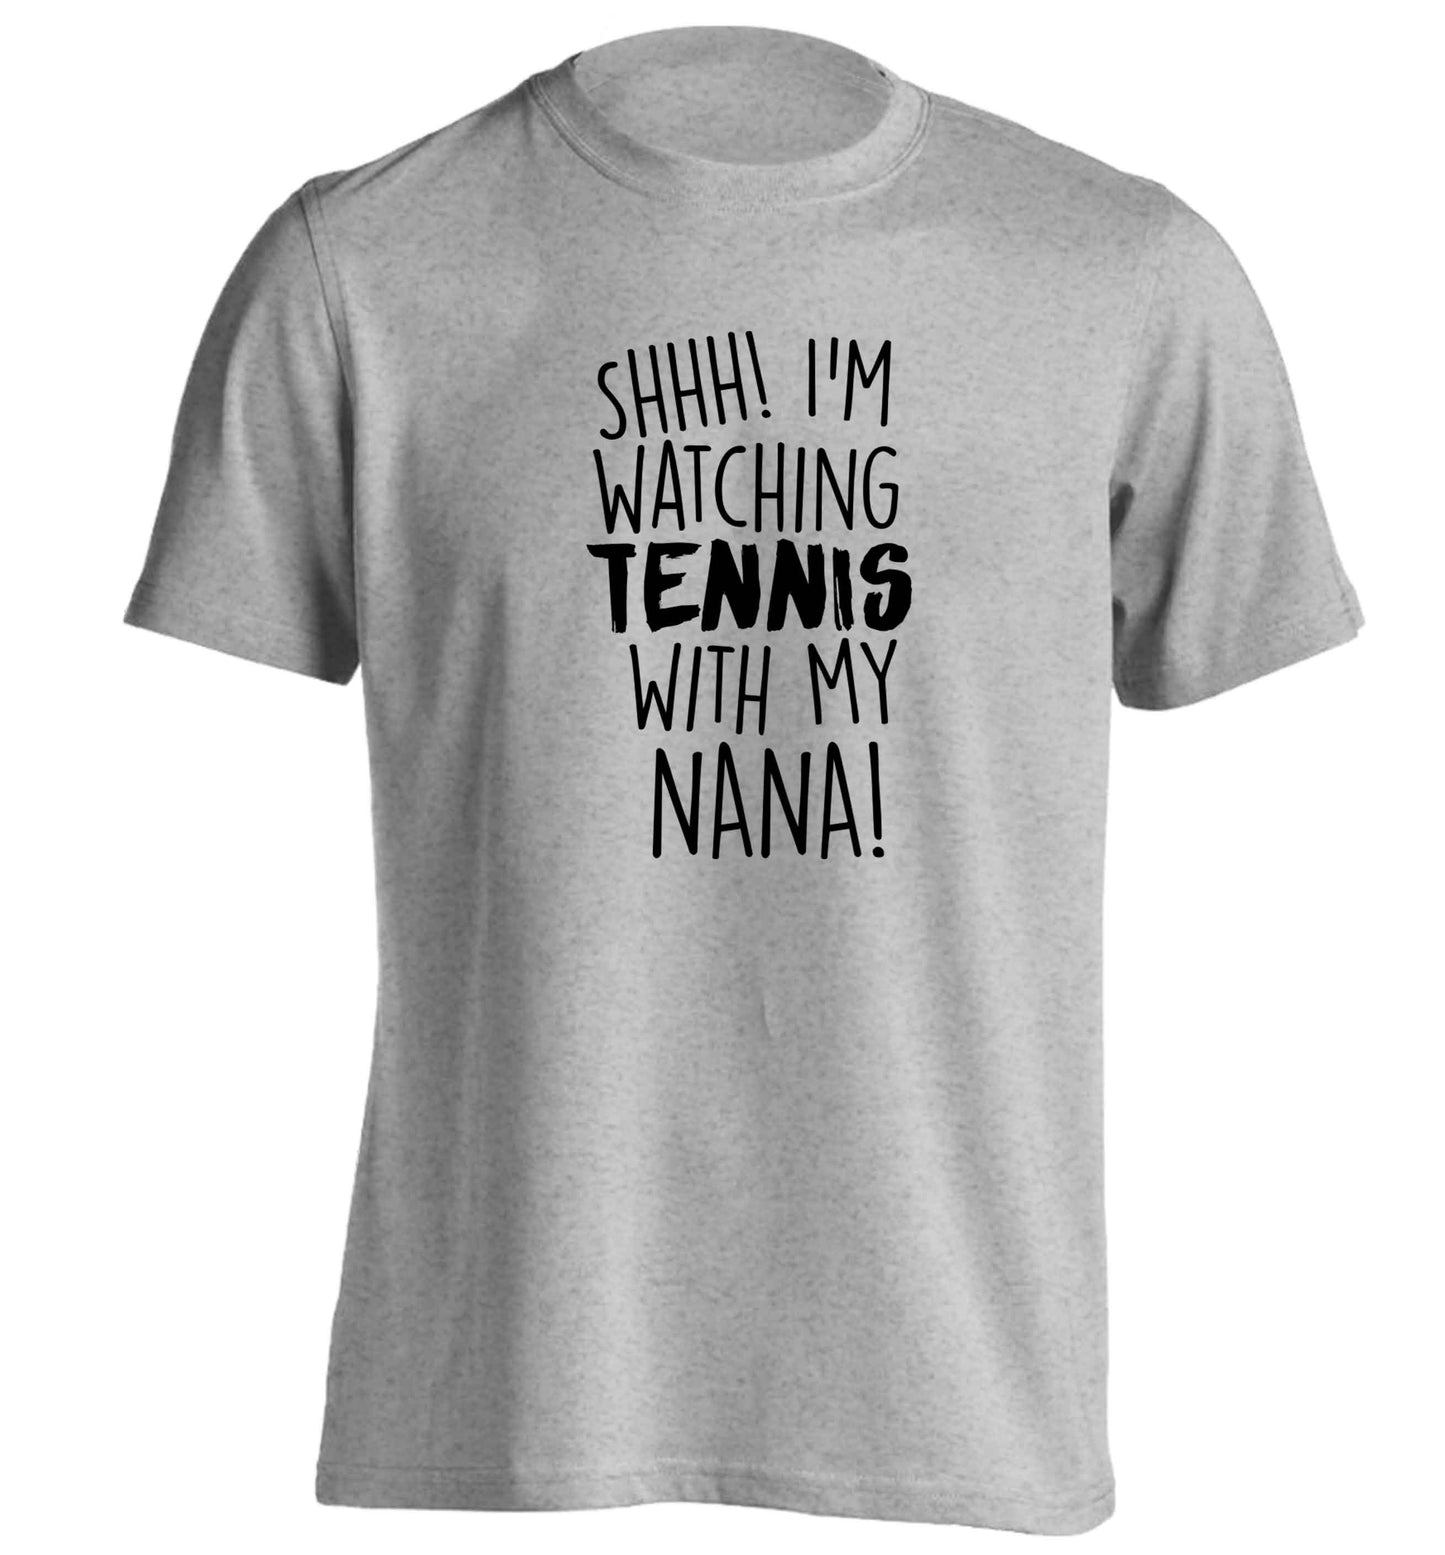 Shh! I'm watching tennis with my nana! adults unisex grey Tshirt 2XL